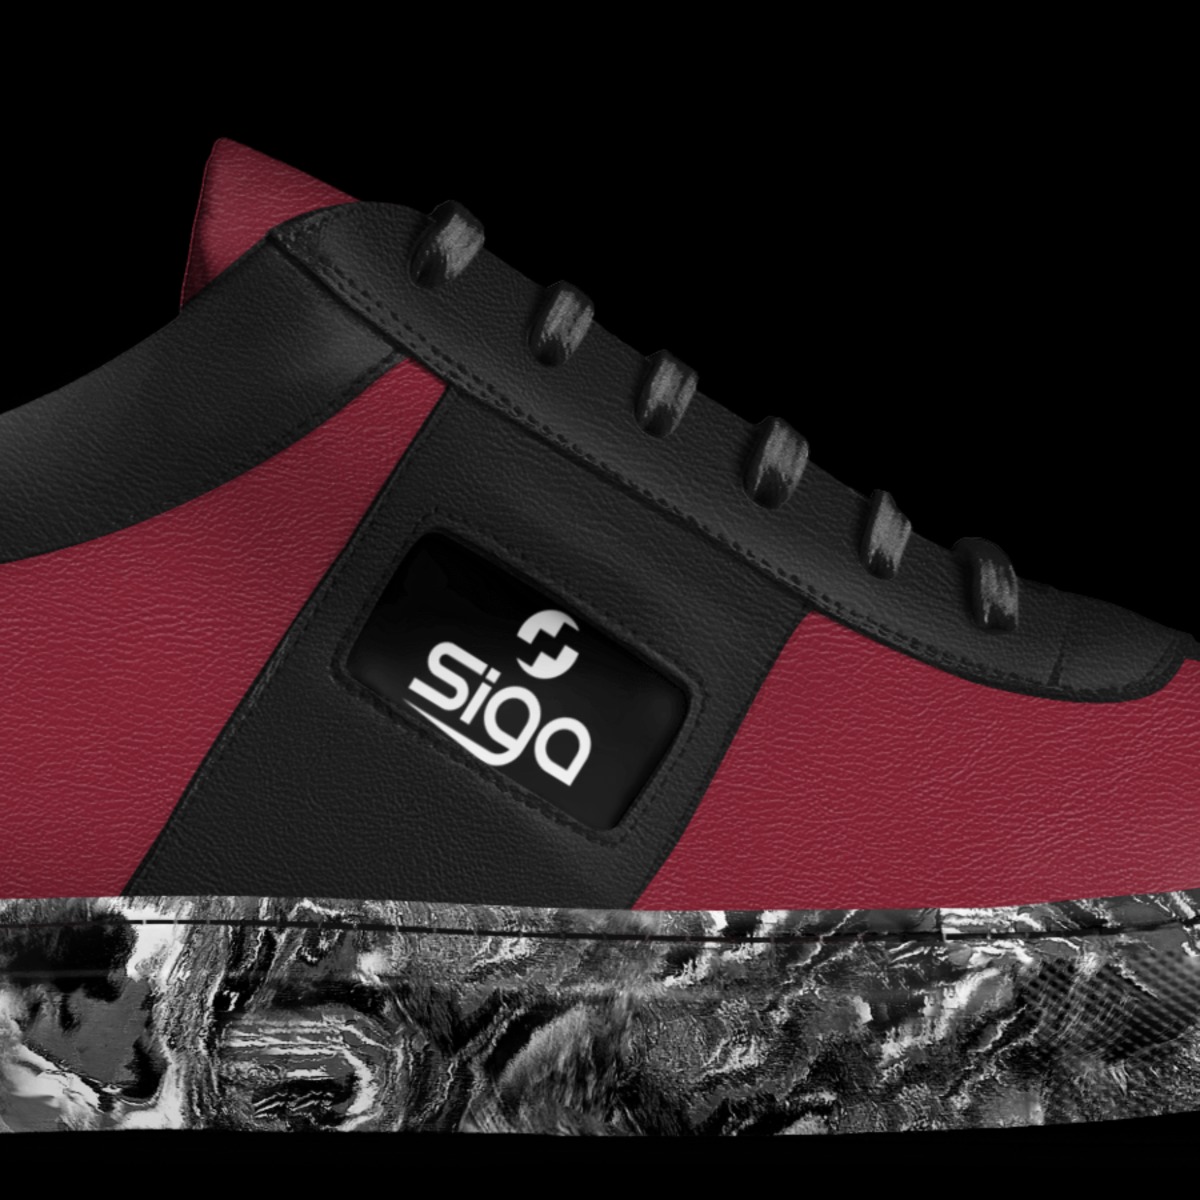 Buy SEGA Men's Marathon Sports Shoes - 10 UK Navy Blue at Amazon.in